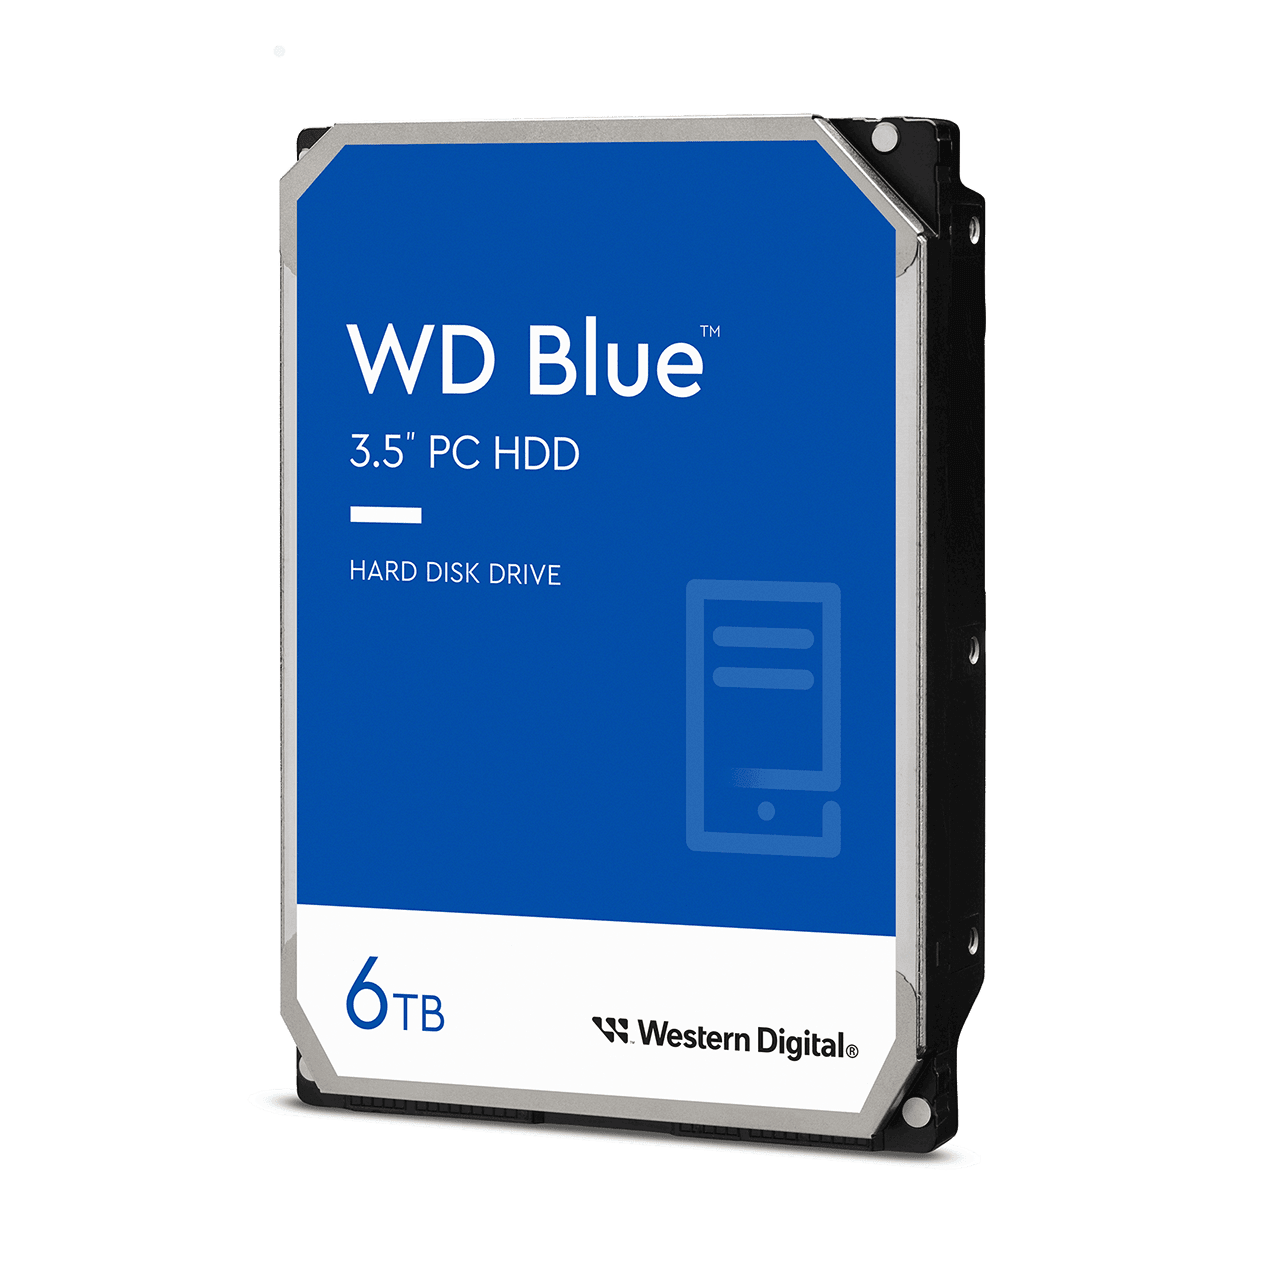 WD Blue 3.5in PC Hard Drive - 6TB - Image10